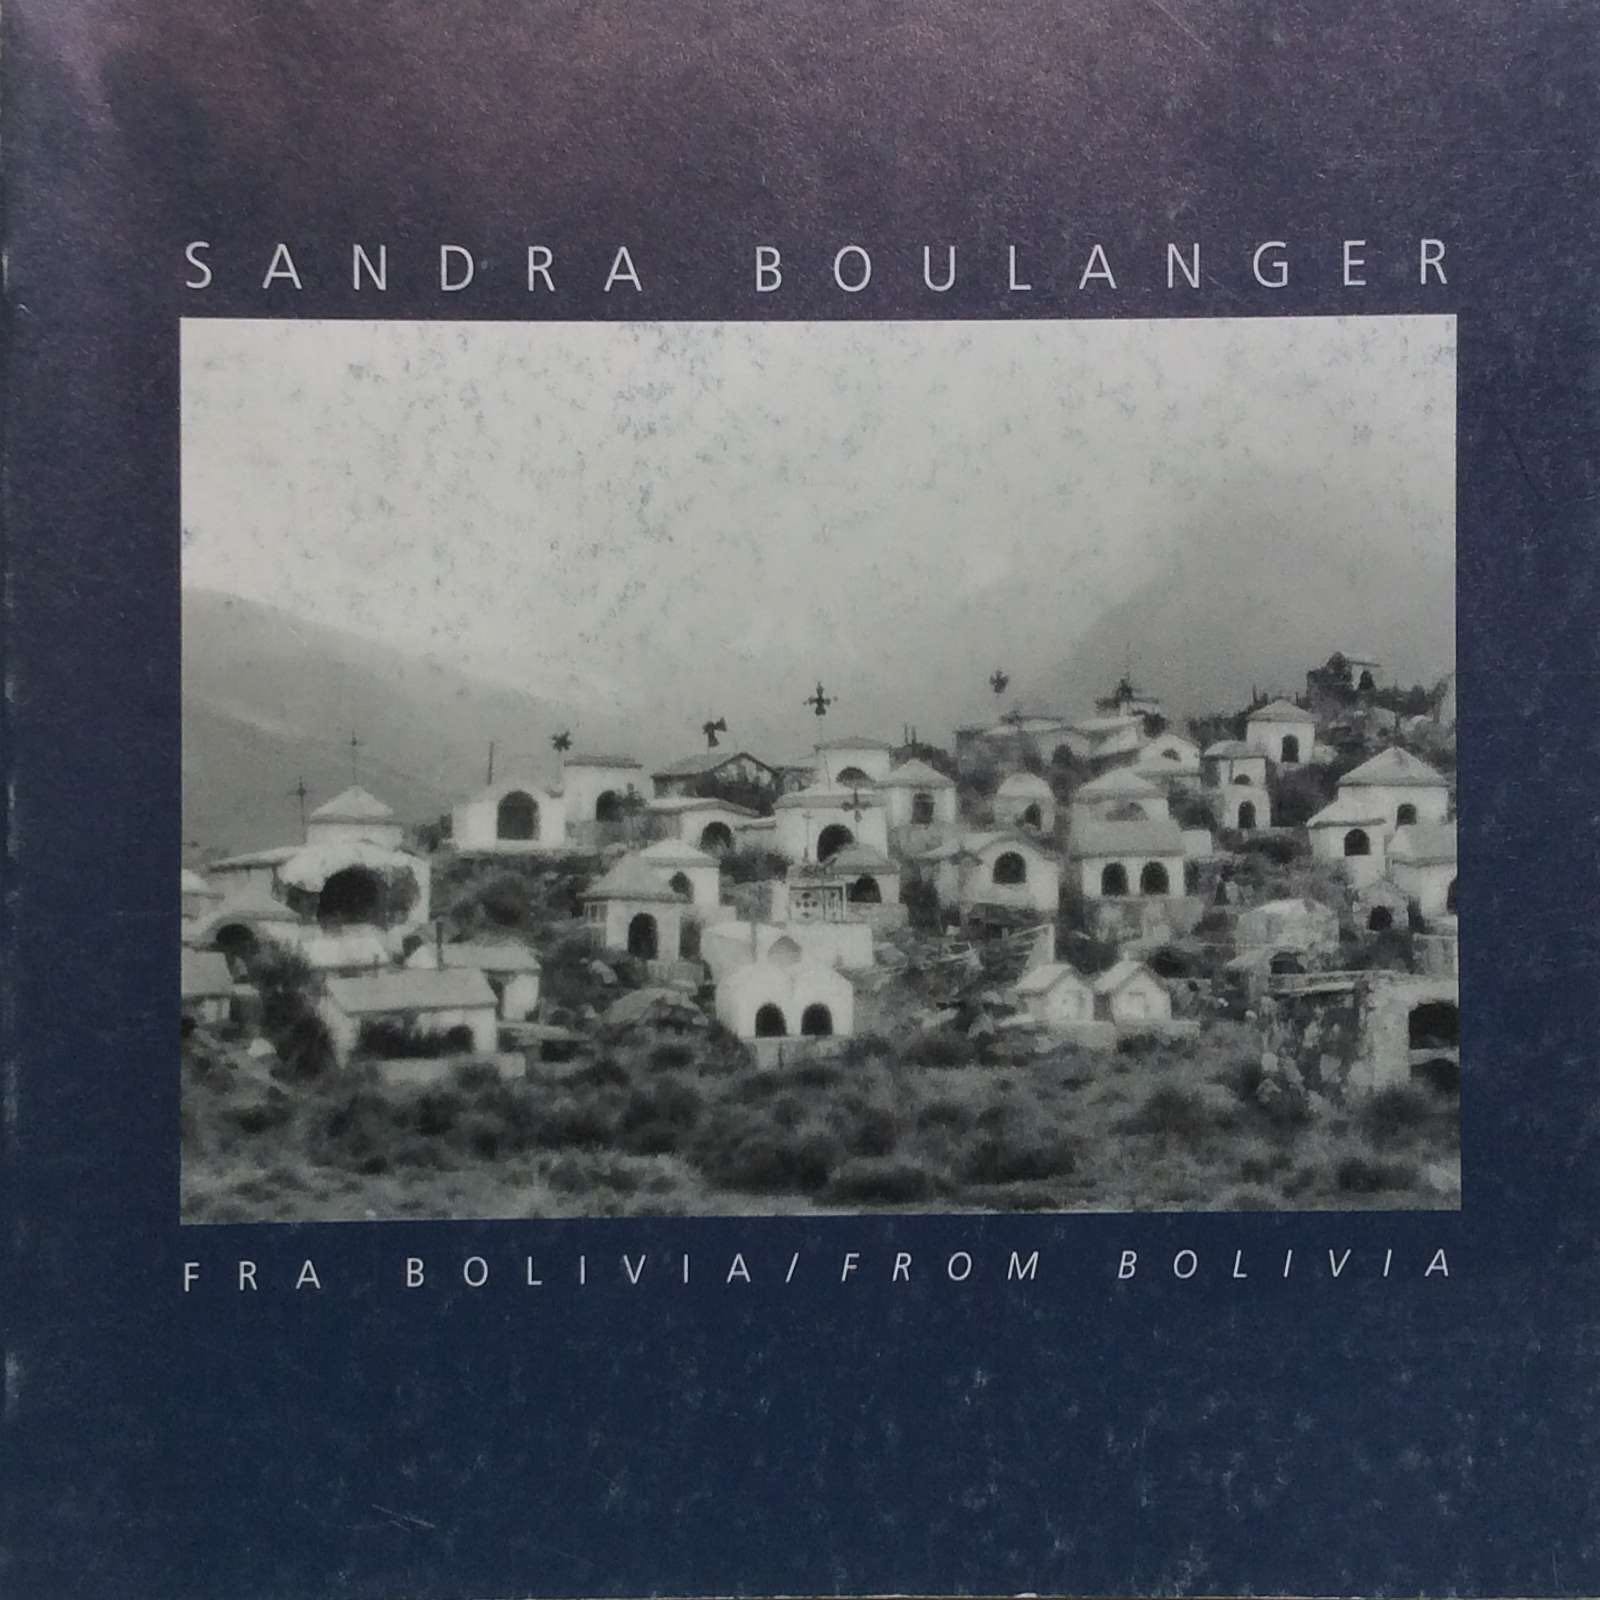 Boulanger, Sandra. Fra Bolivia